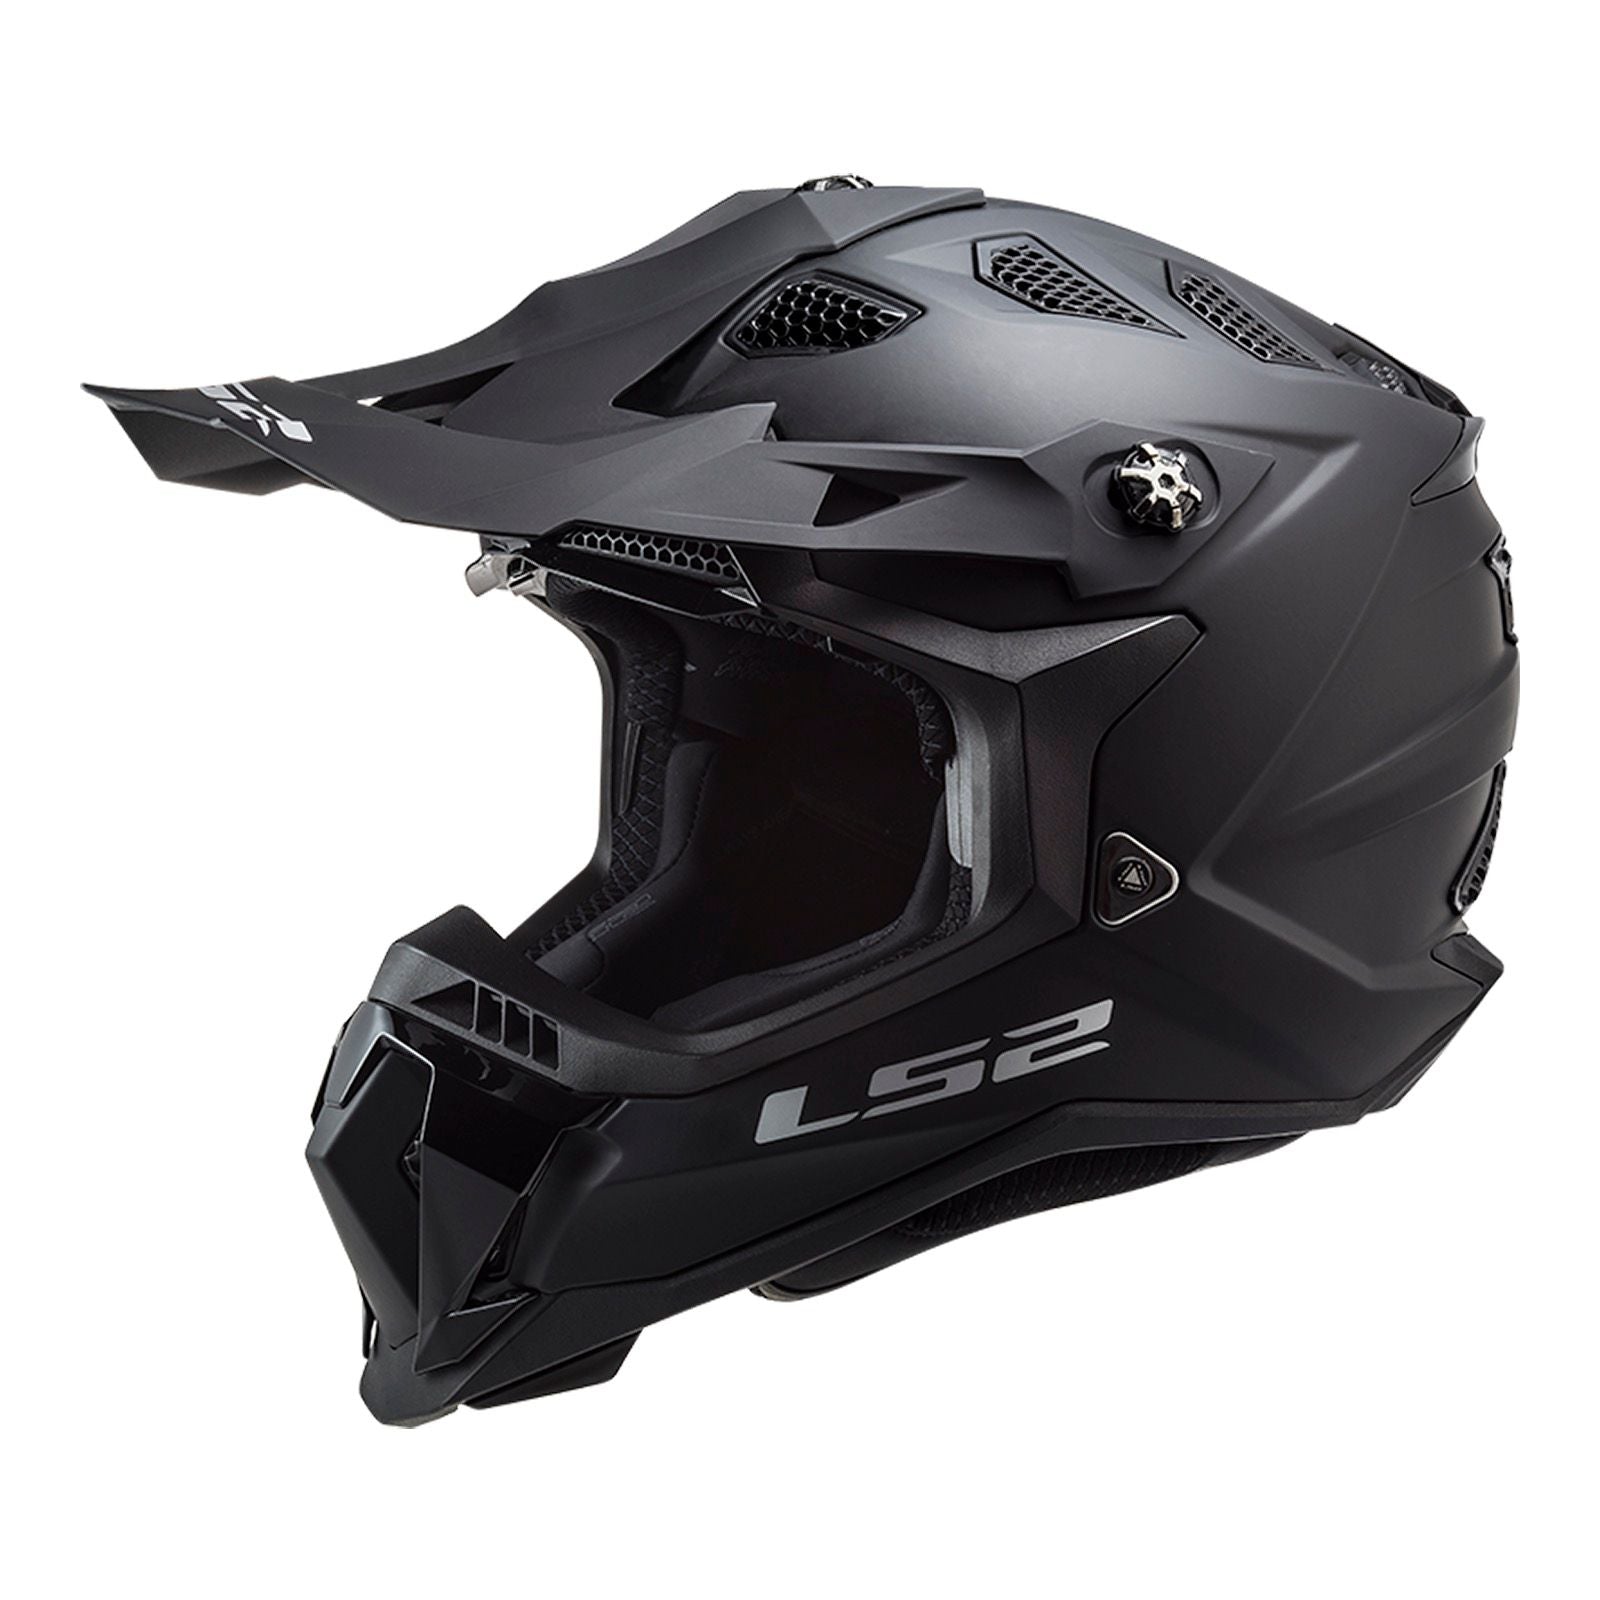 New LS2 MX700 Subverter EVO Noir Helmet - Matte Black (M) #LS2MX700SOLMBM